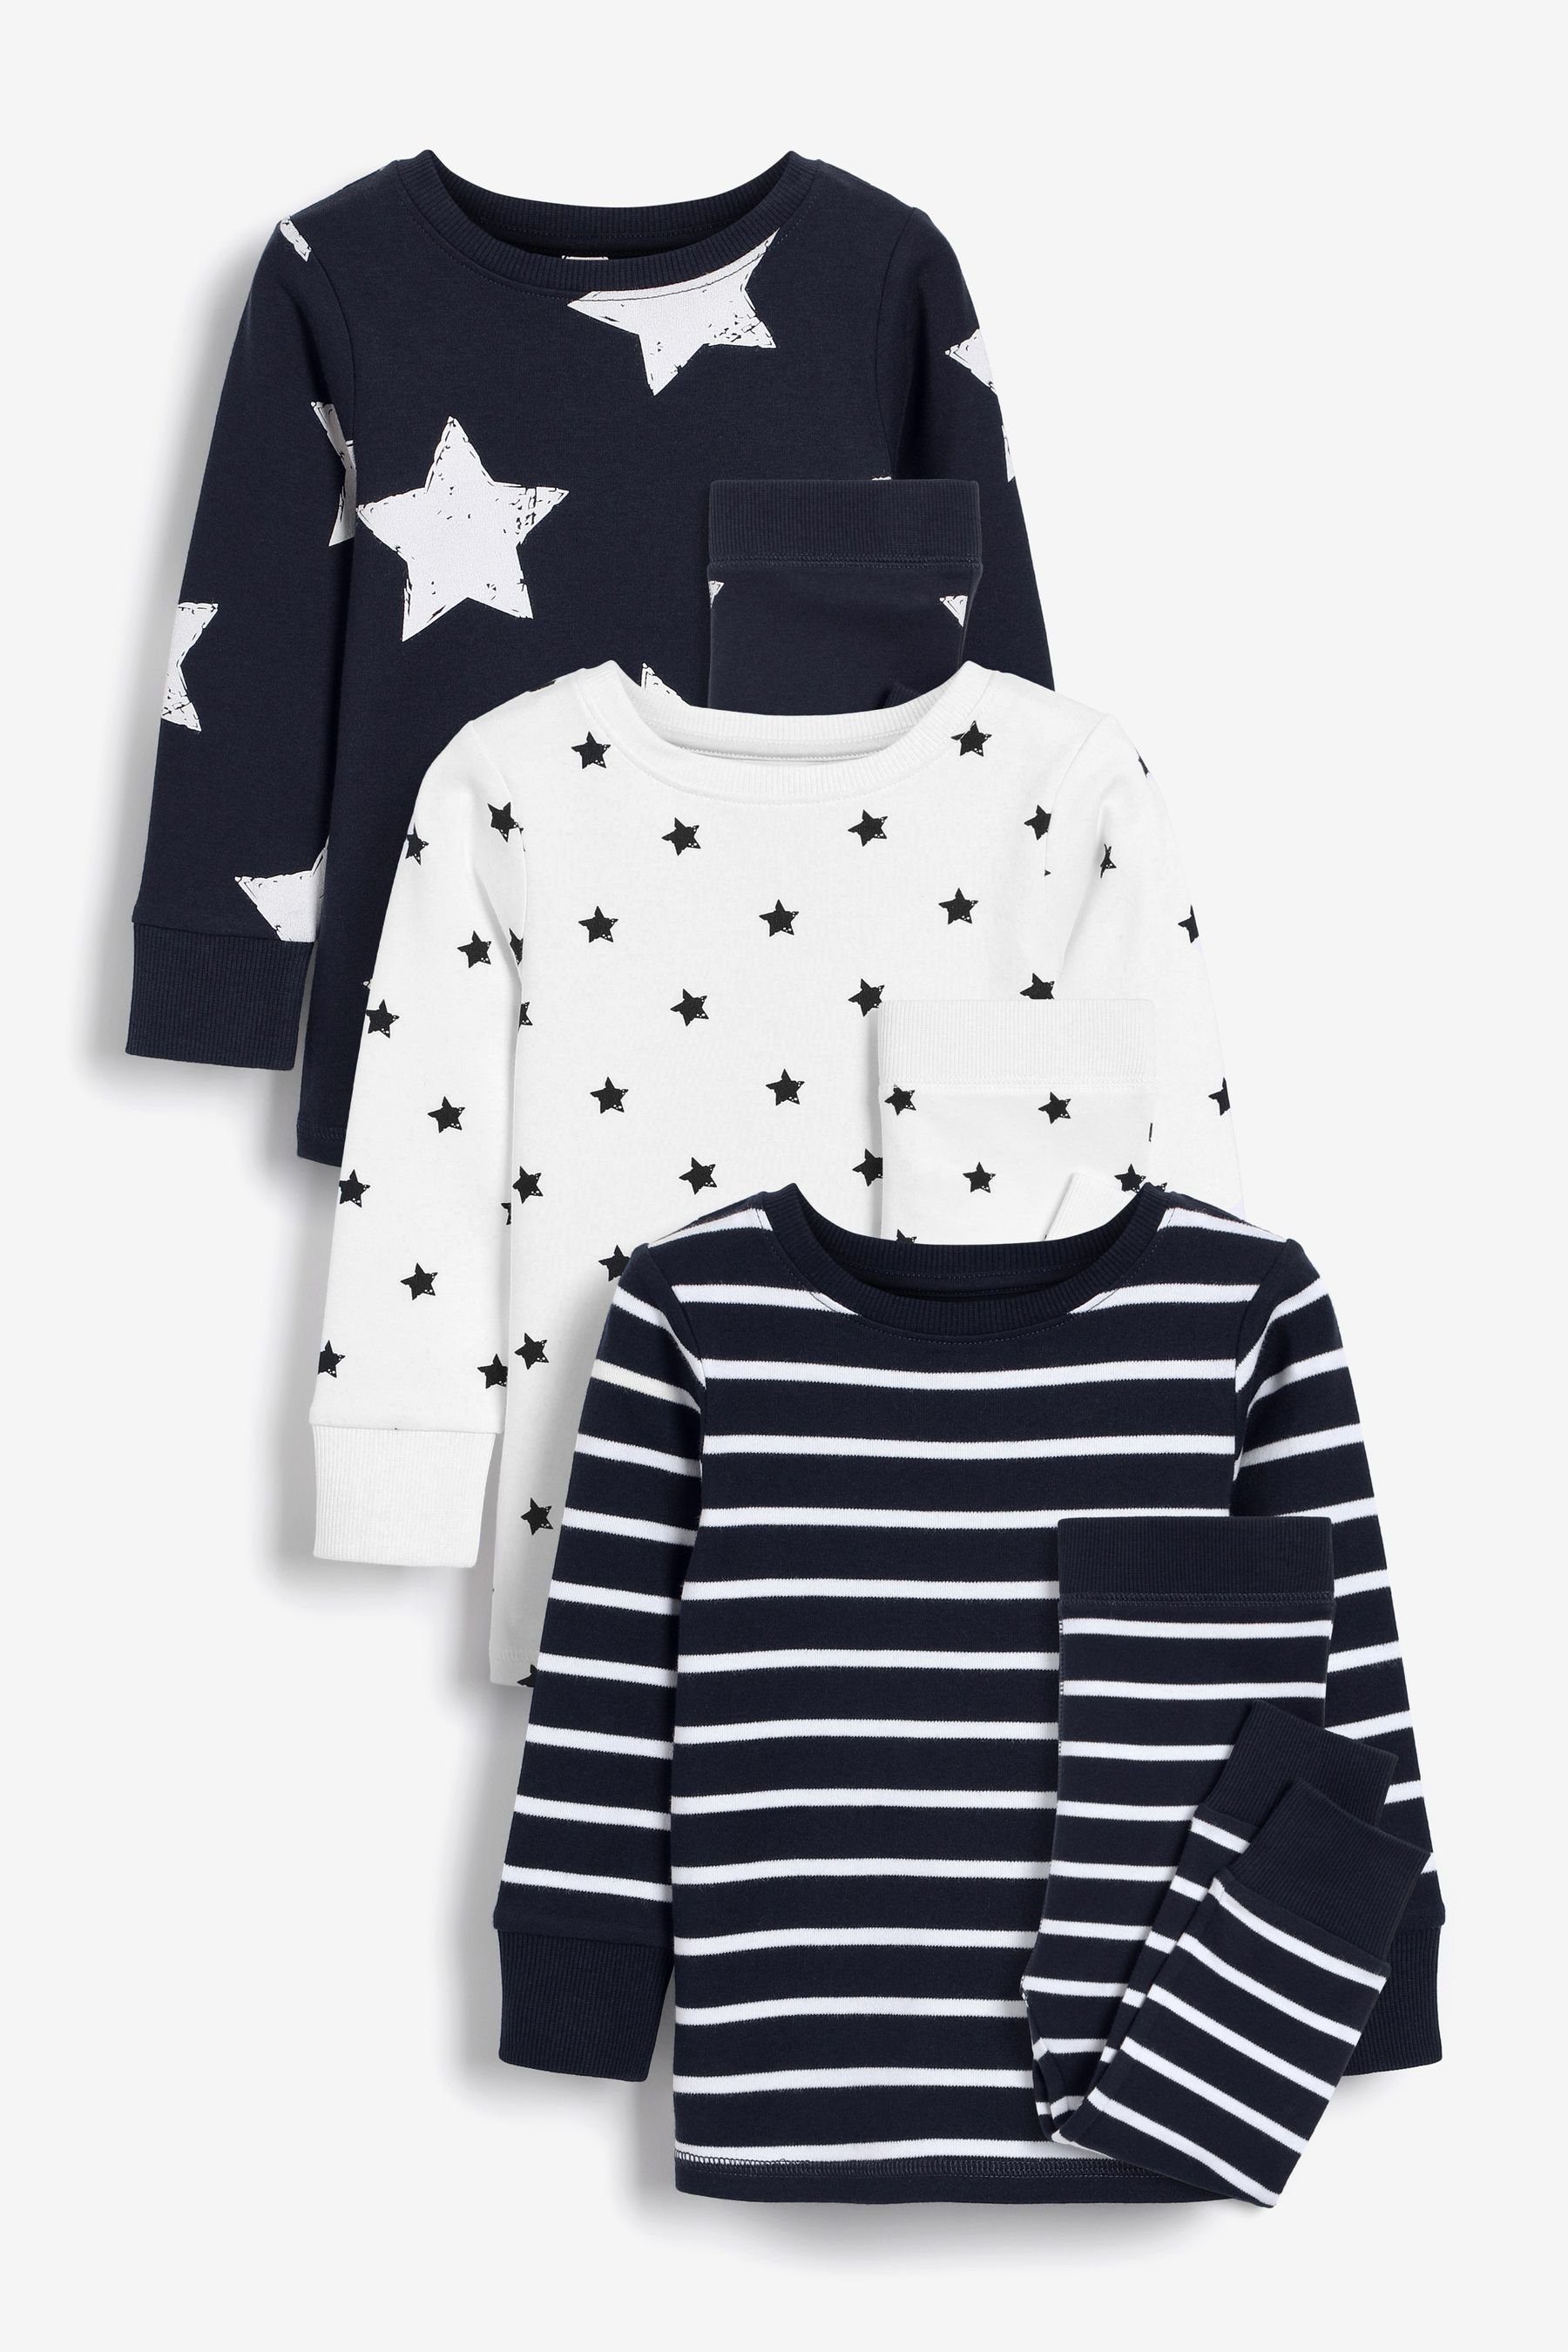 Next Pyjama Kuschelpyjamas, 3er-Pack (6 tlg) Navy Blue/White Star